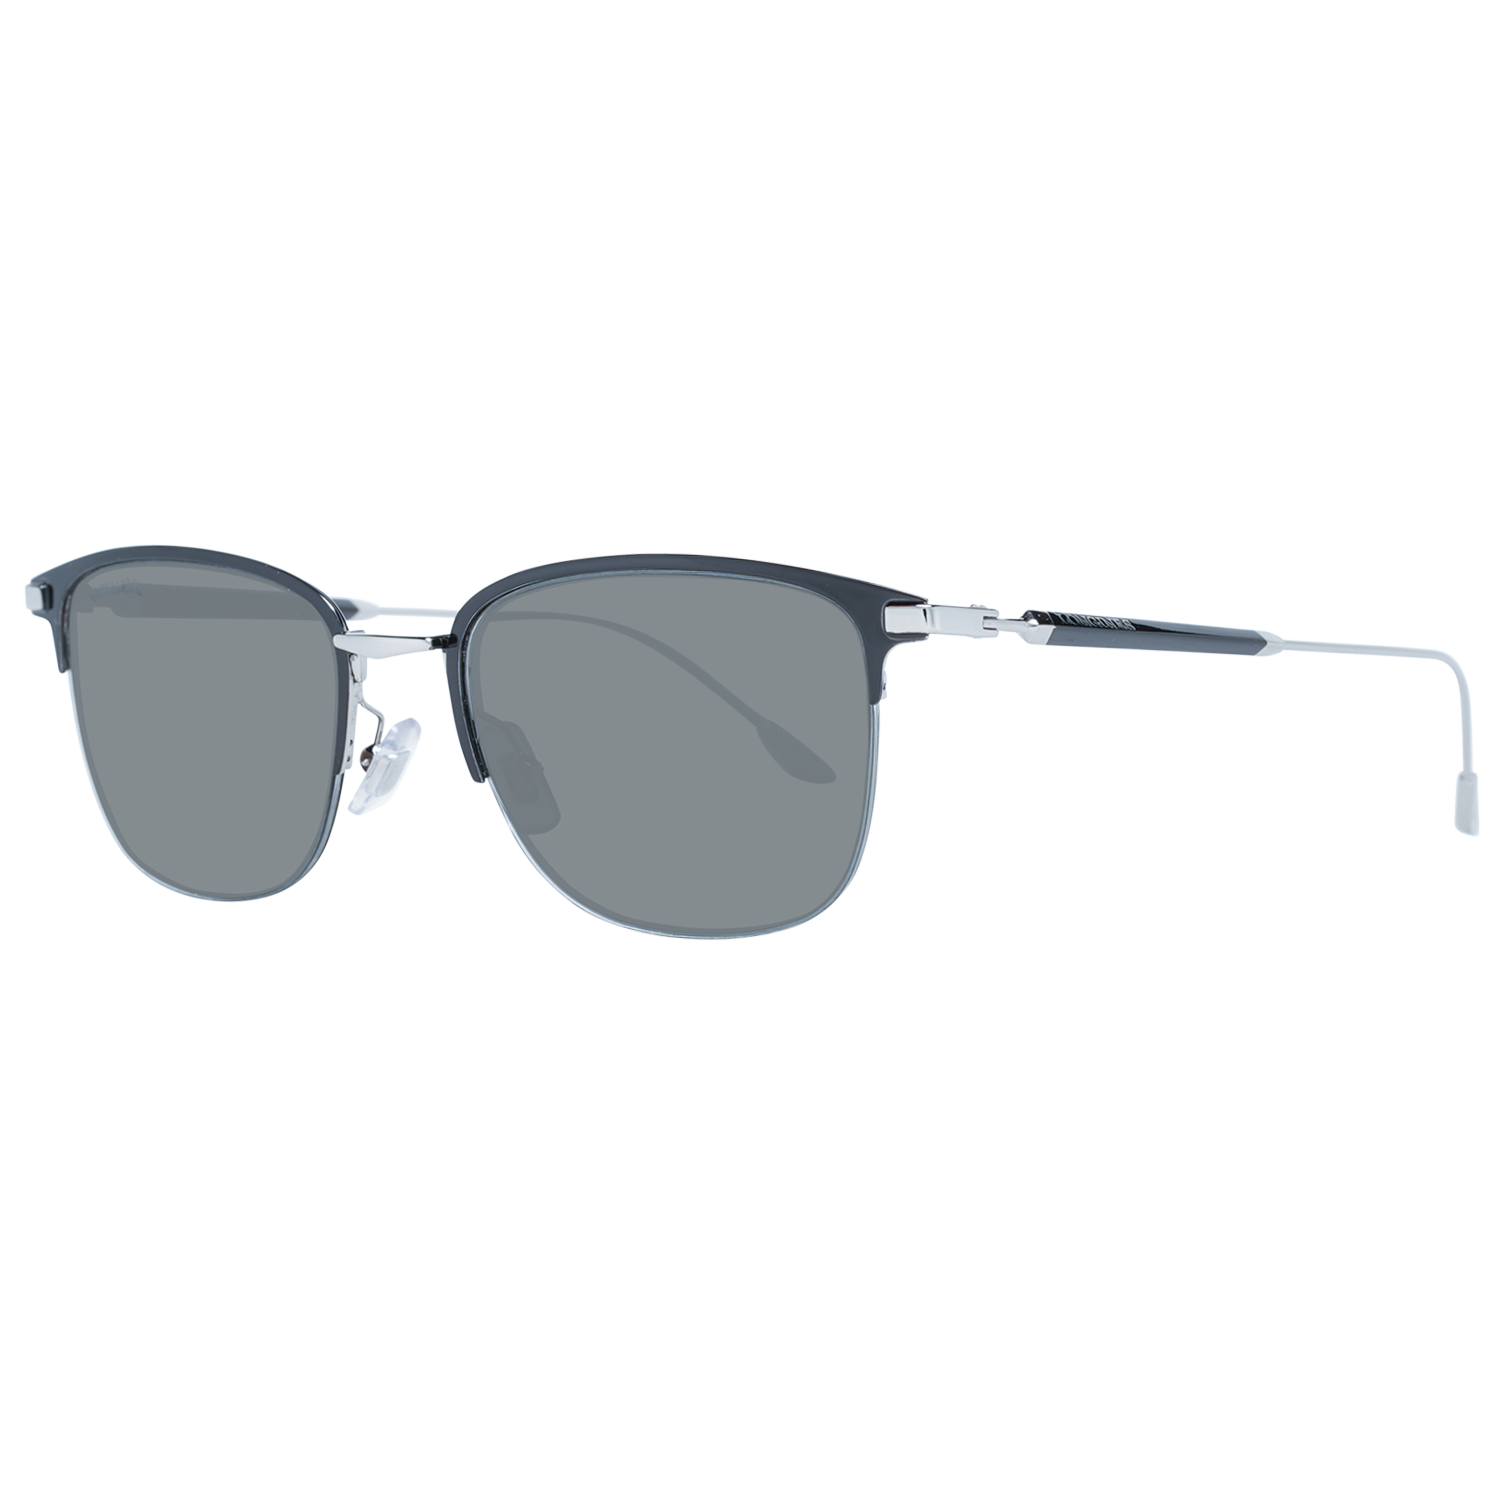 Longines Sunglasses Longines Sunglasses LG0022 01A 53mm Eyeglasses Eyewear UK USA Australia 